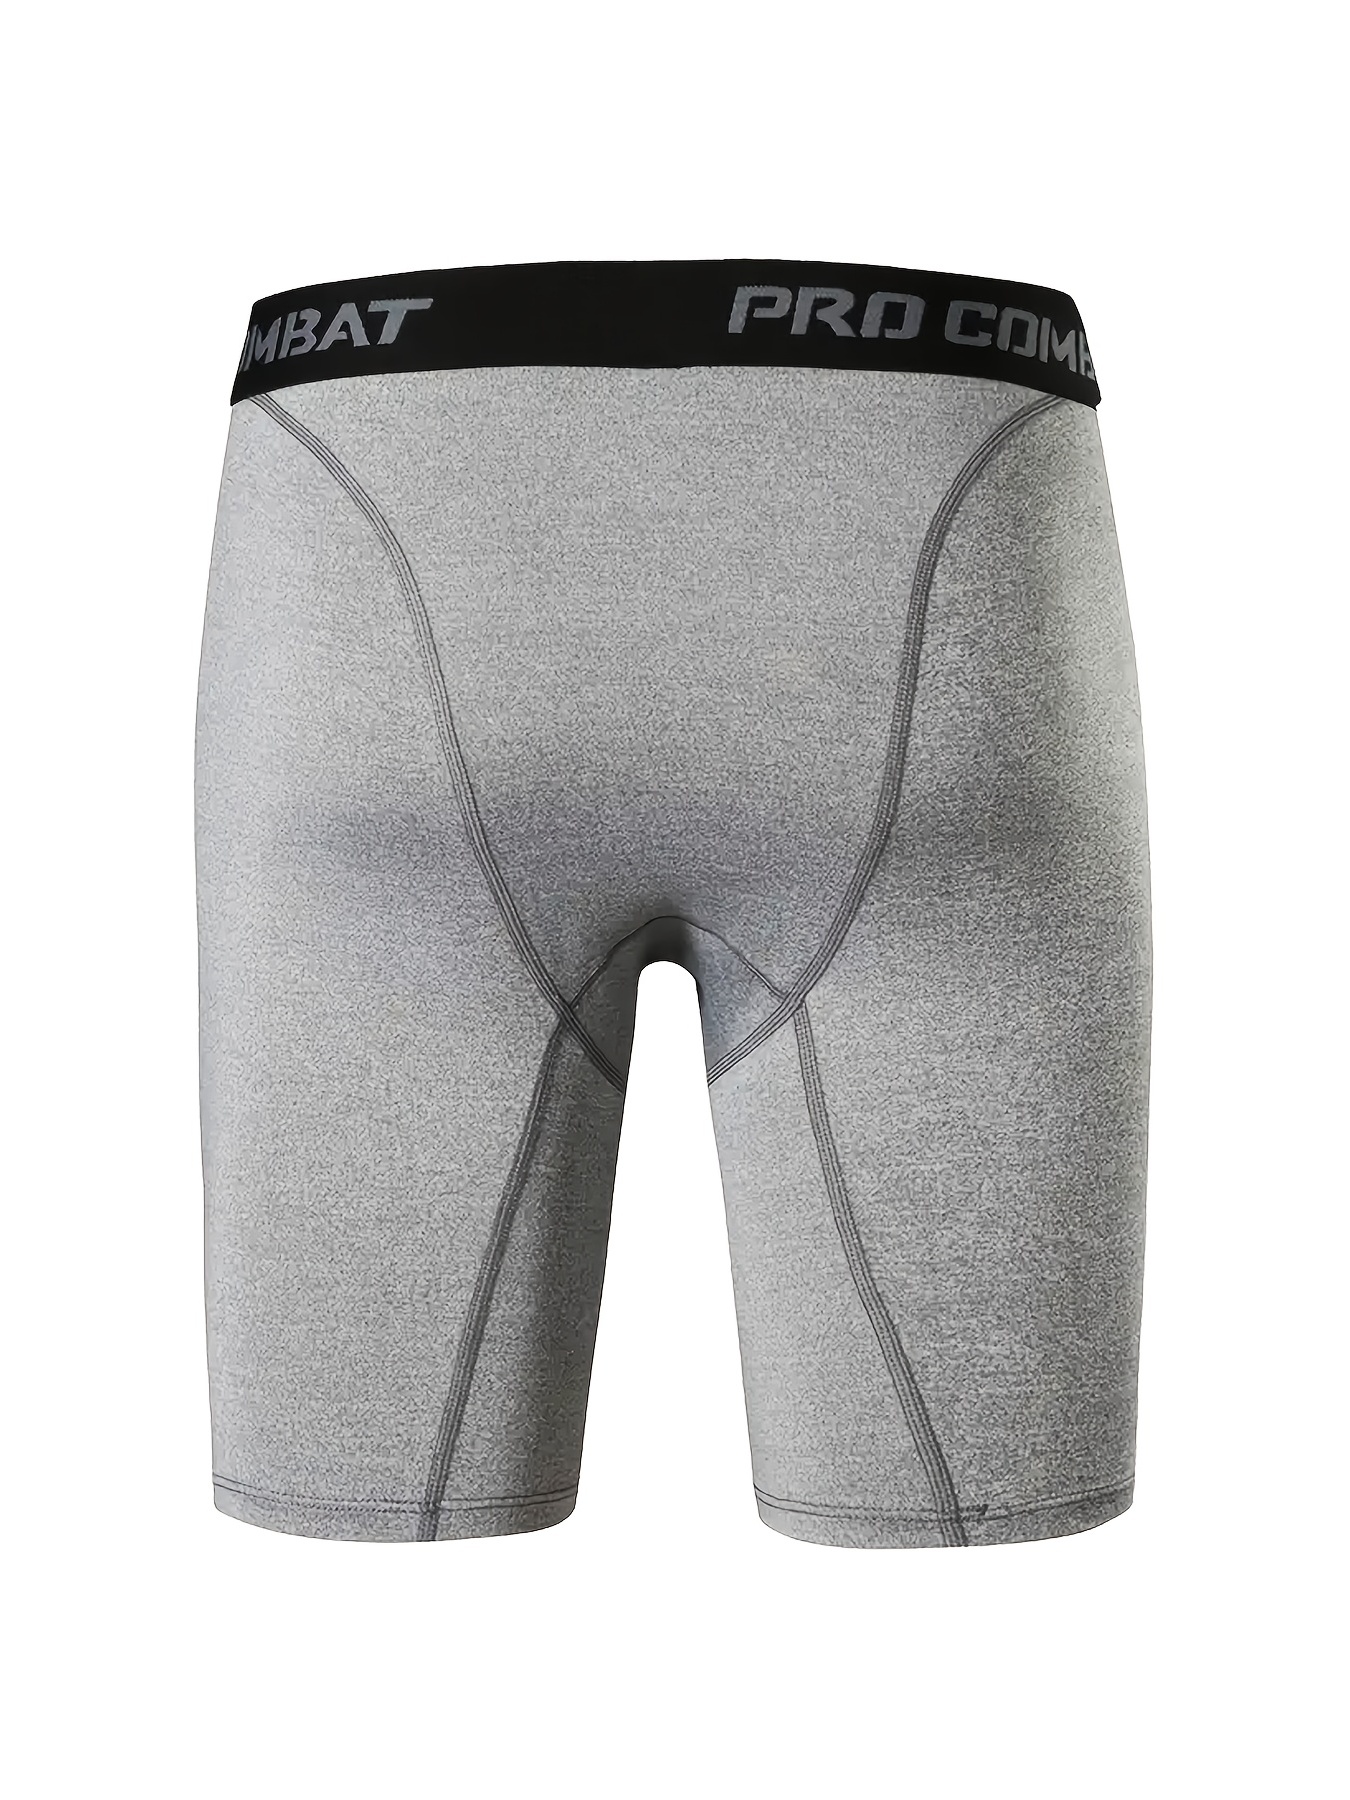 Compression Running Shorts Men Sport Panties Long Leg Boxer Briefs Soft  Comfort Modal Underwear Underpants Sports Gym Trunks A50 - AliExpress